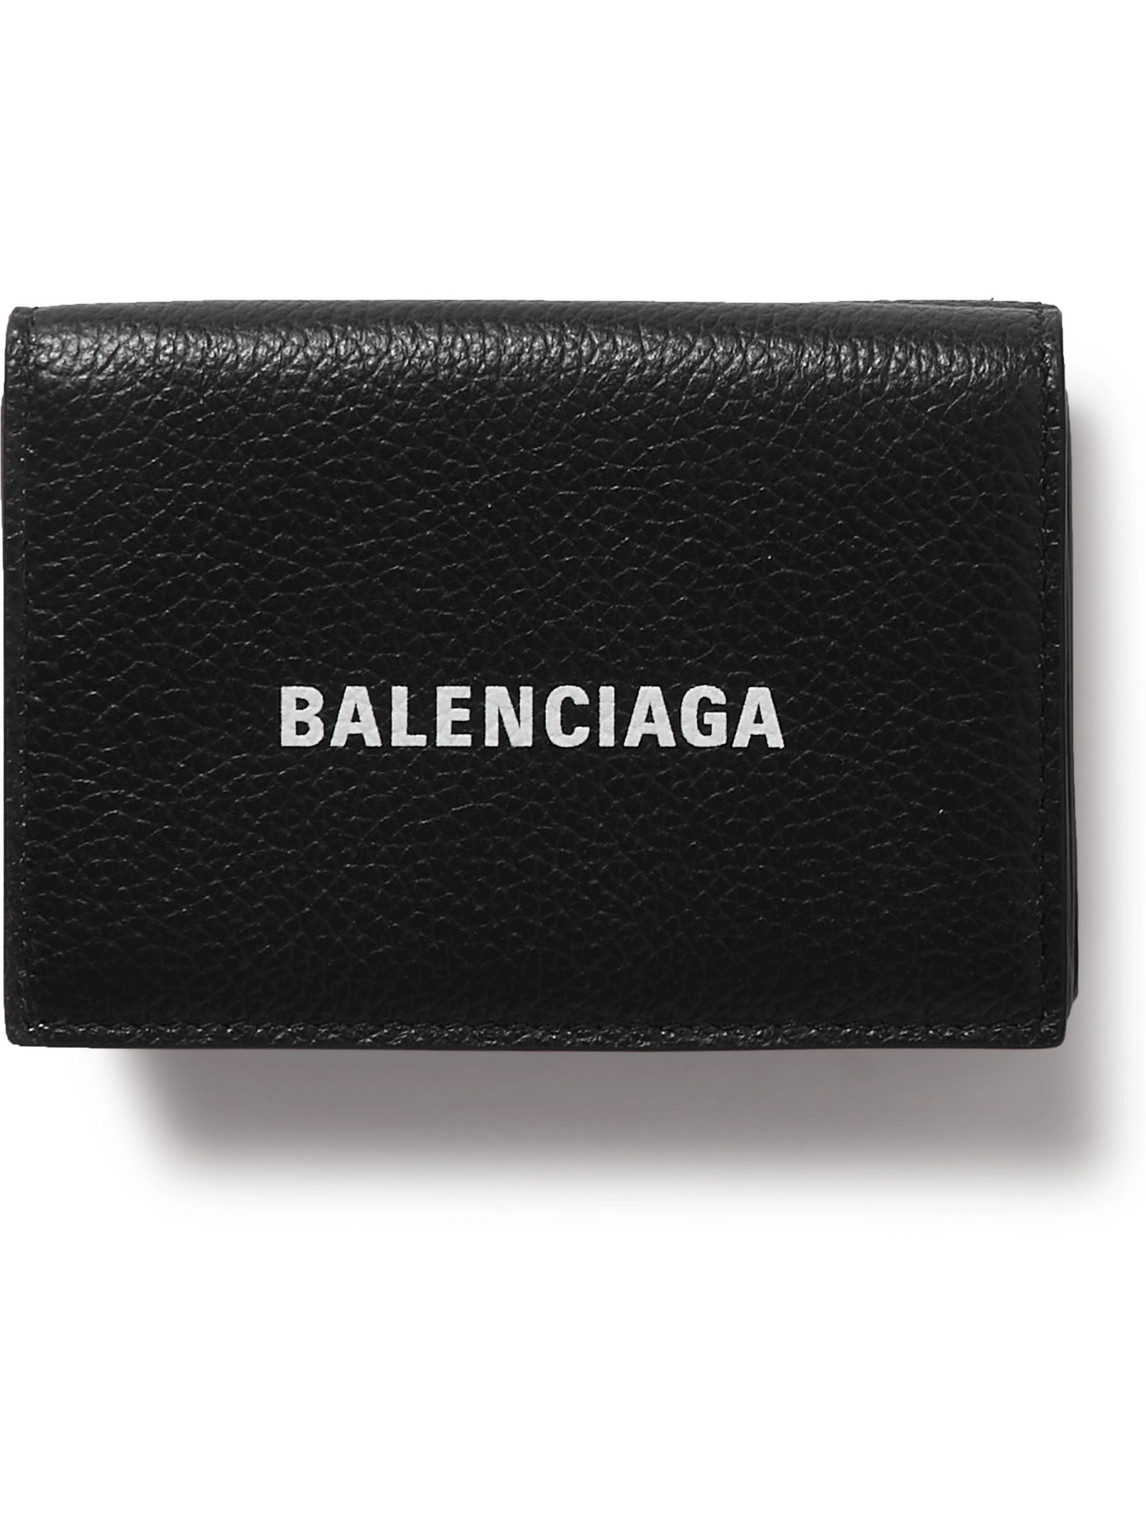 Balenciaga - Logo-Print Full-Grain Leather Trifold Wallet - Men - Black von Balenciaga